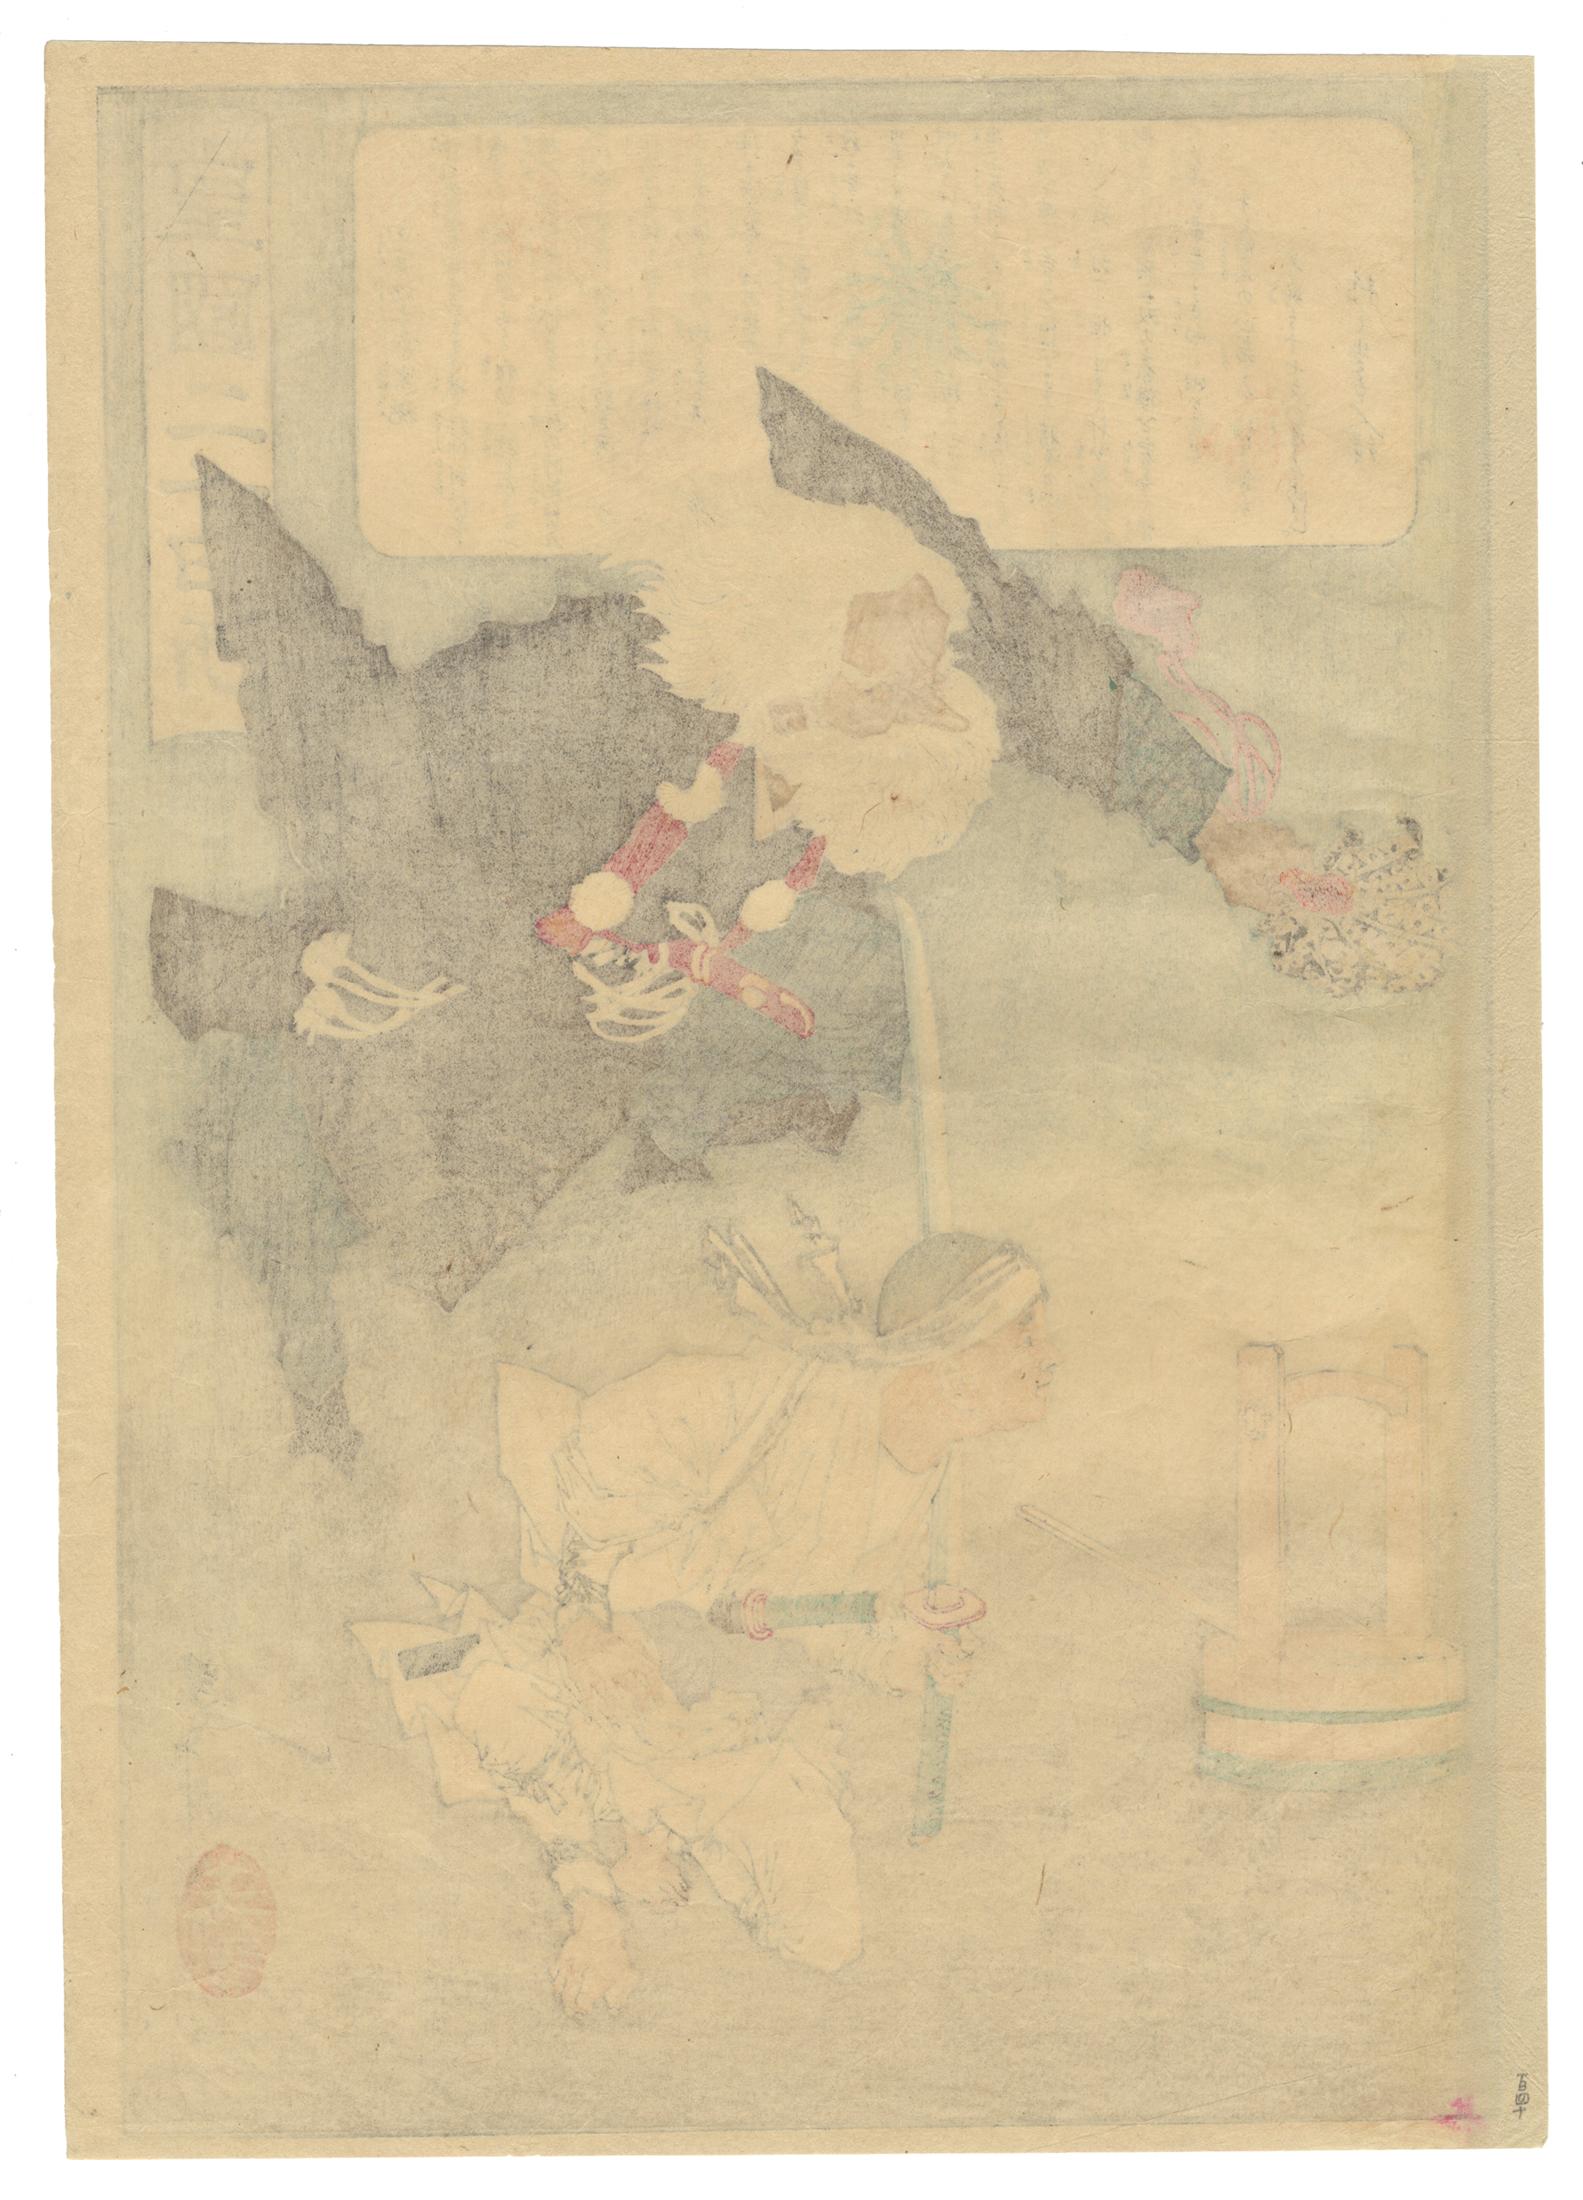 Artist: Yoshitoshi Tsukioka (1839-1892)
Title: Tamiya Botaro Munechika - The Spirit of Tengu helping Tamiya Botaro Munechika avenge his father's death from the series 'Twenty-four Accomplishments in Imperial Japan'
Publisher: Matsuki